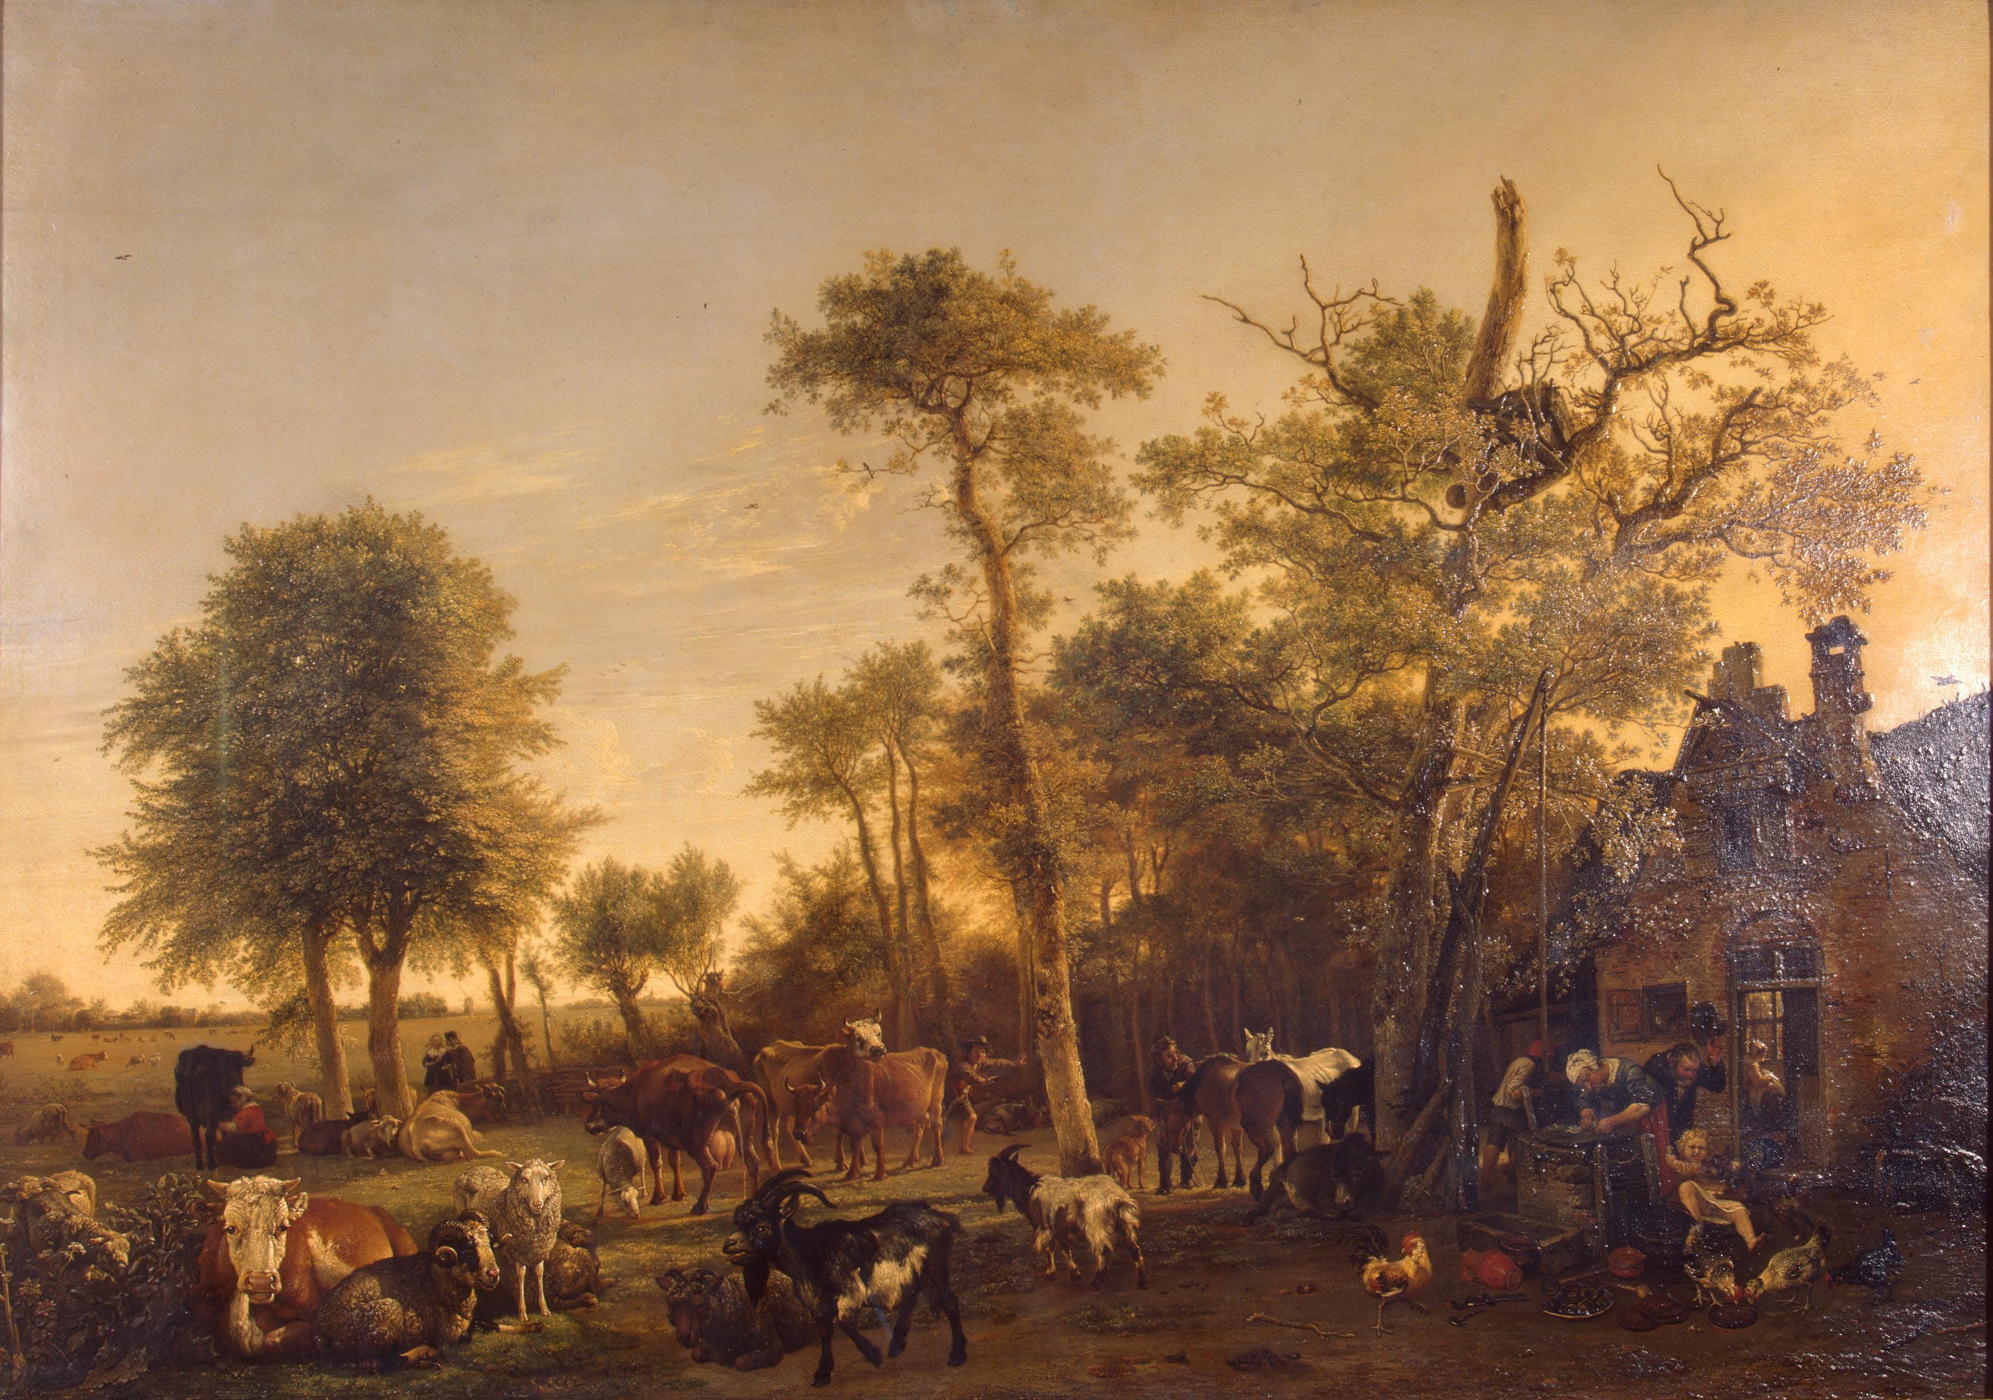 The Farm by Paulus Potter